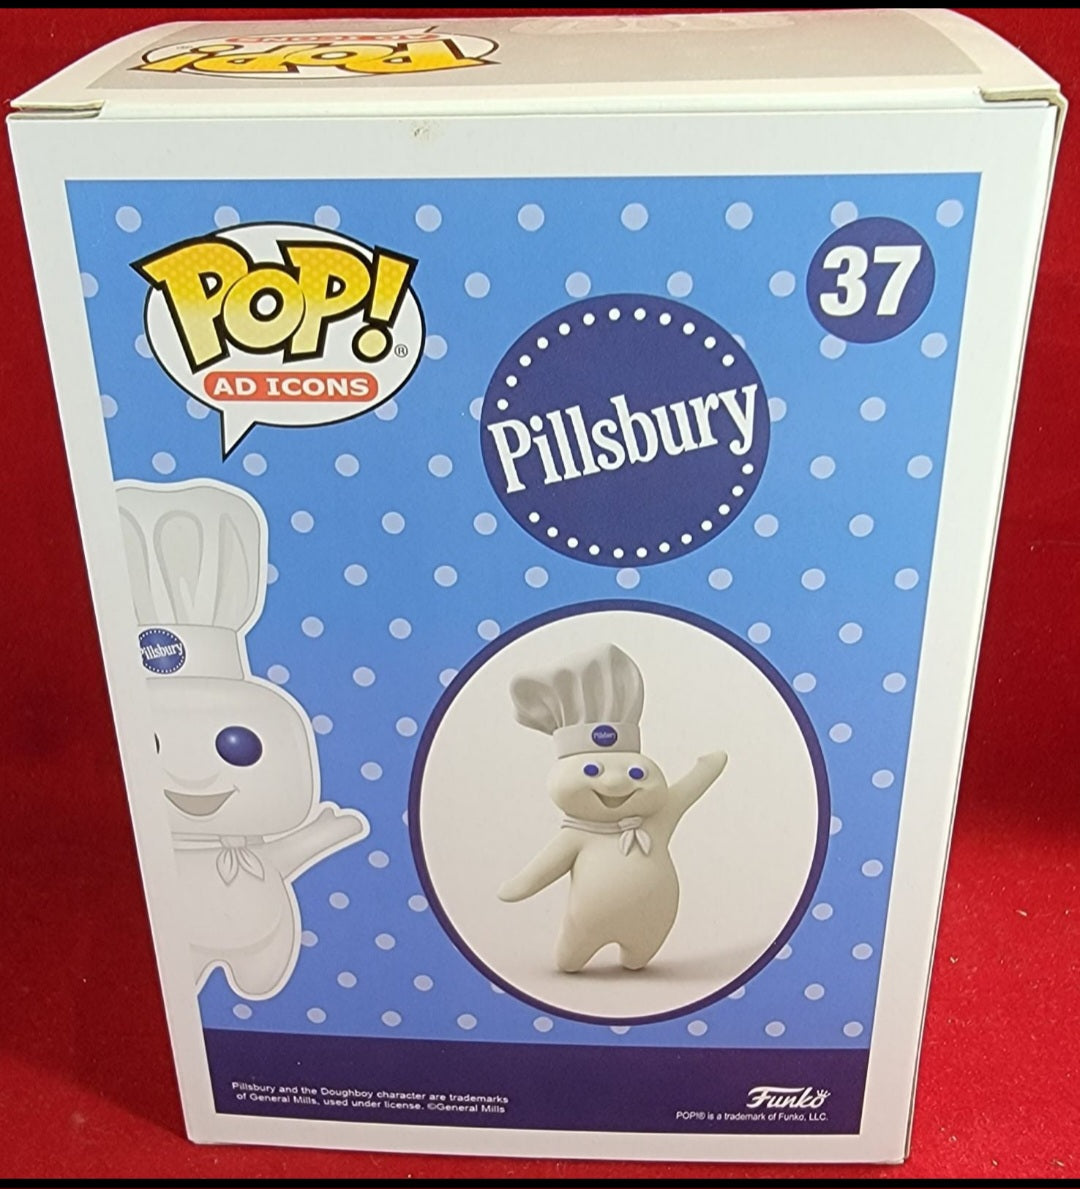 Pillsbury doughboy funko exclusive # 37 (nib)